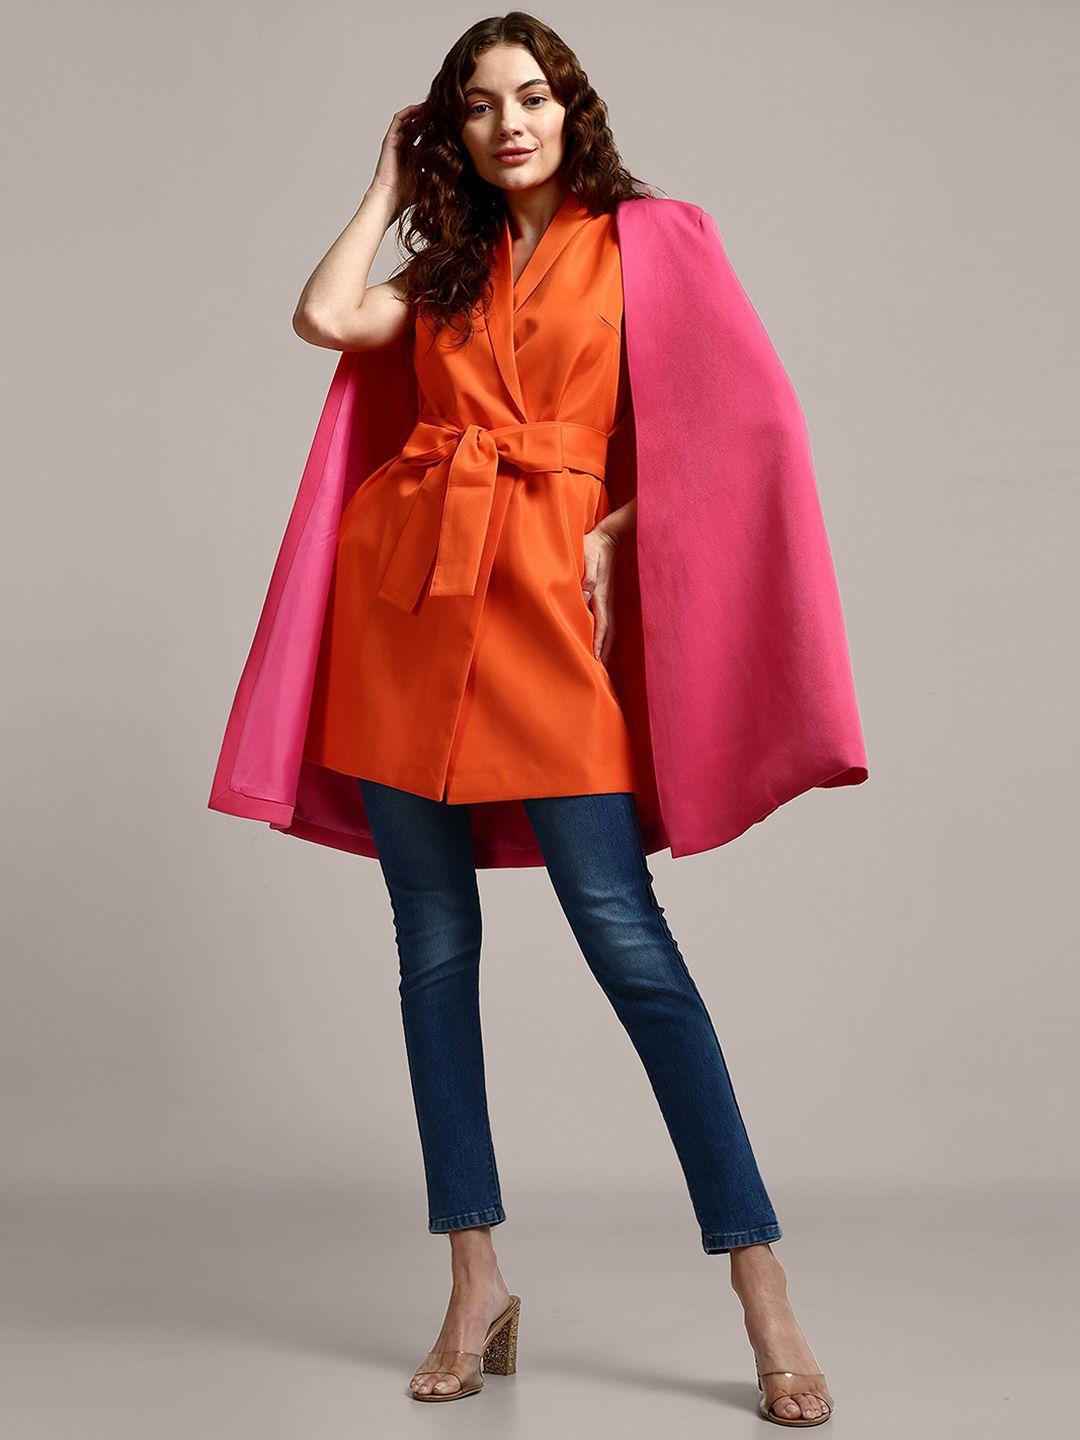 iki chic pink & orange dual color tied waist oversized layered blazer